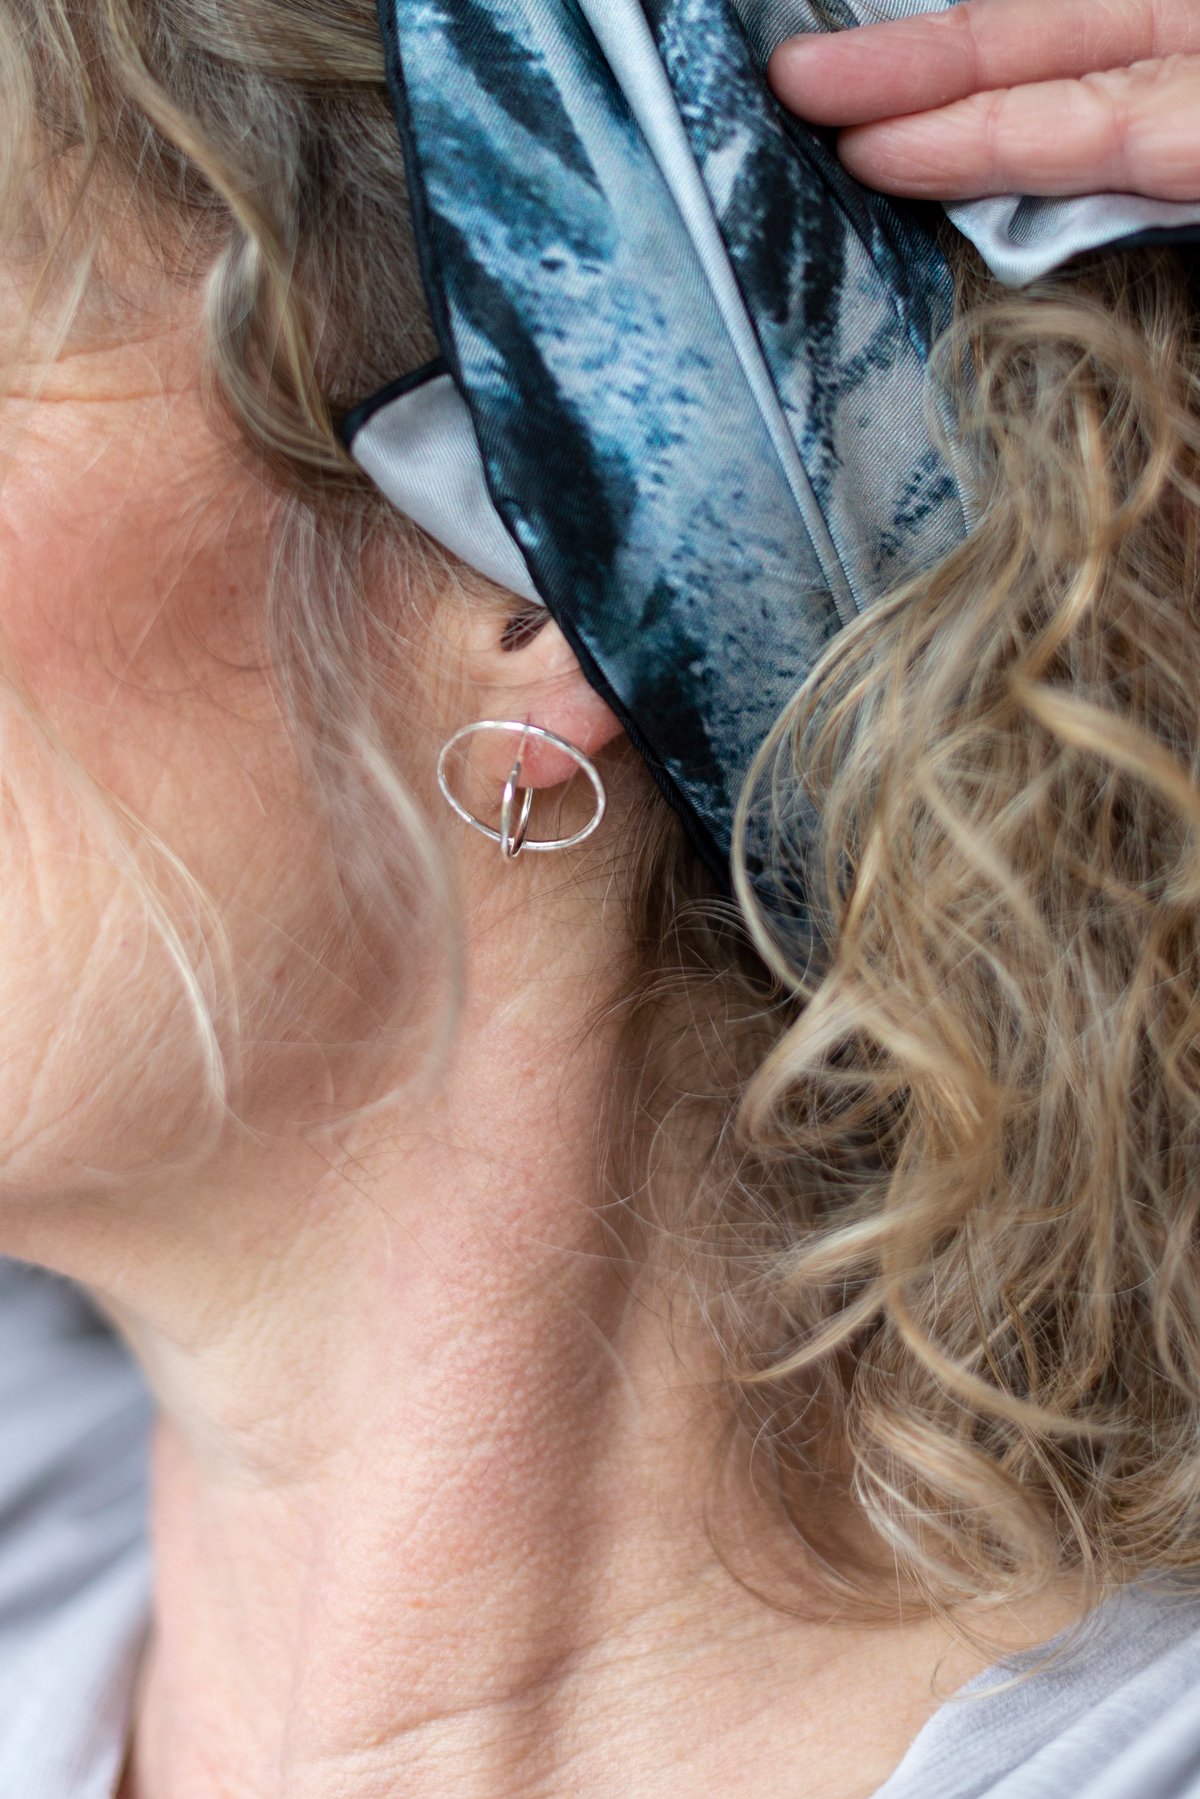 Image of Double hoop earrings